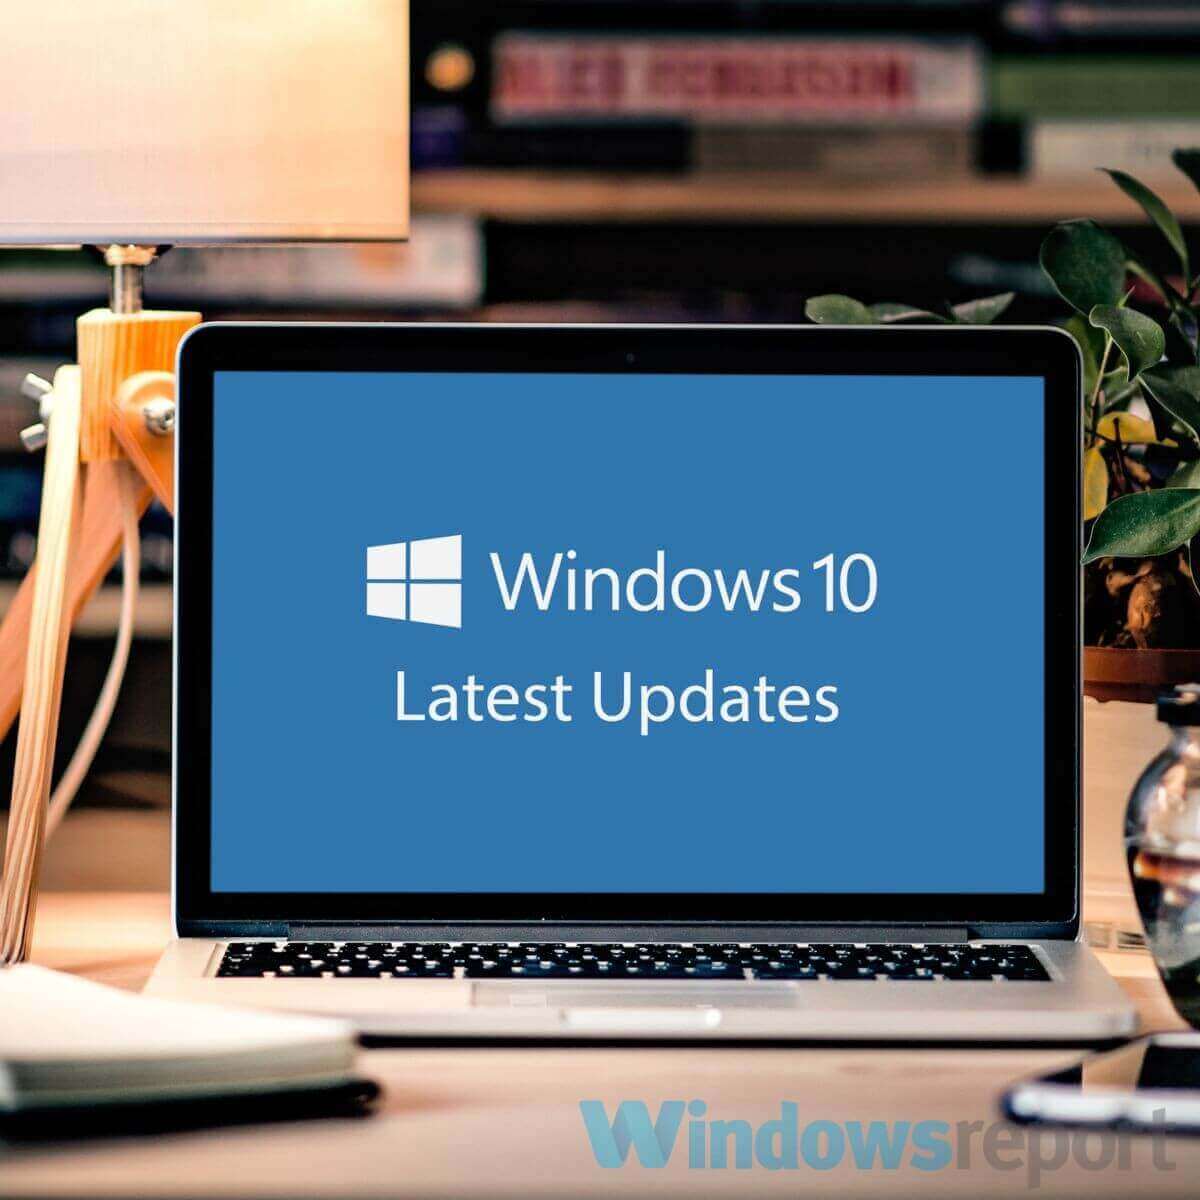 Microsoft released Windwos 10 buidl 18970